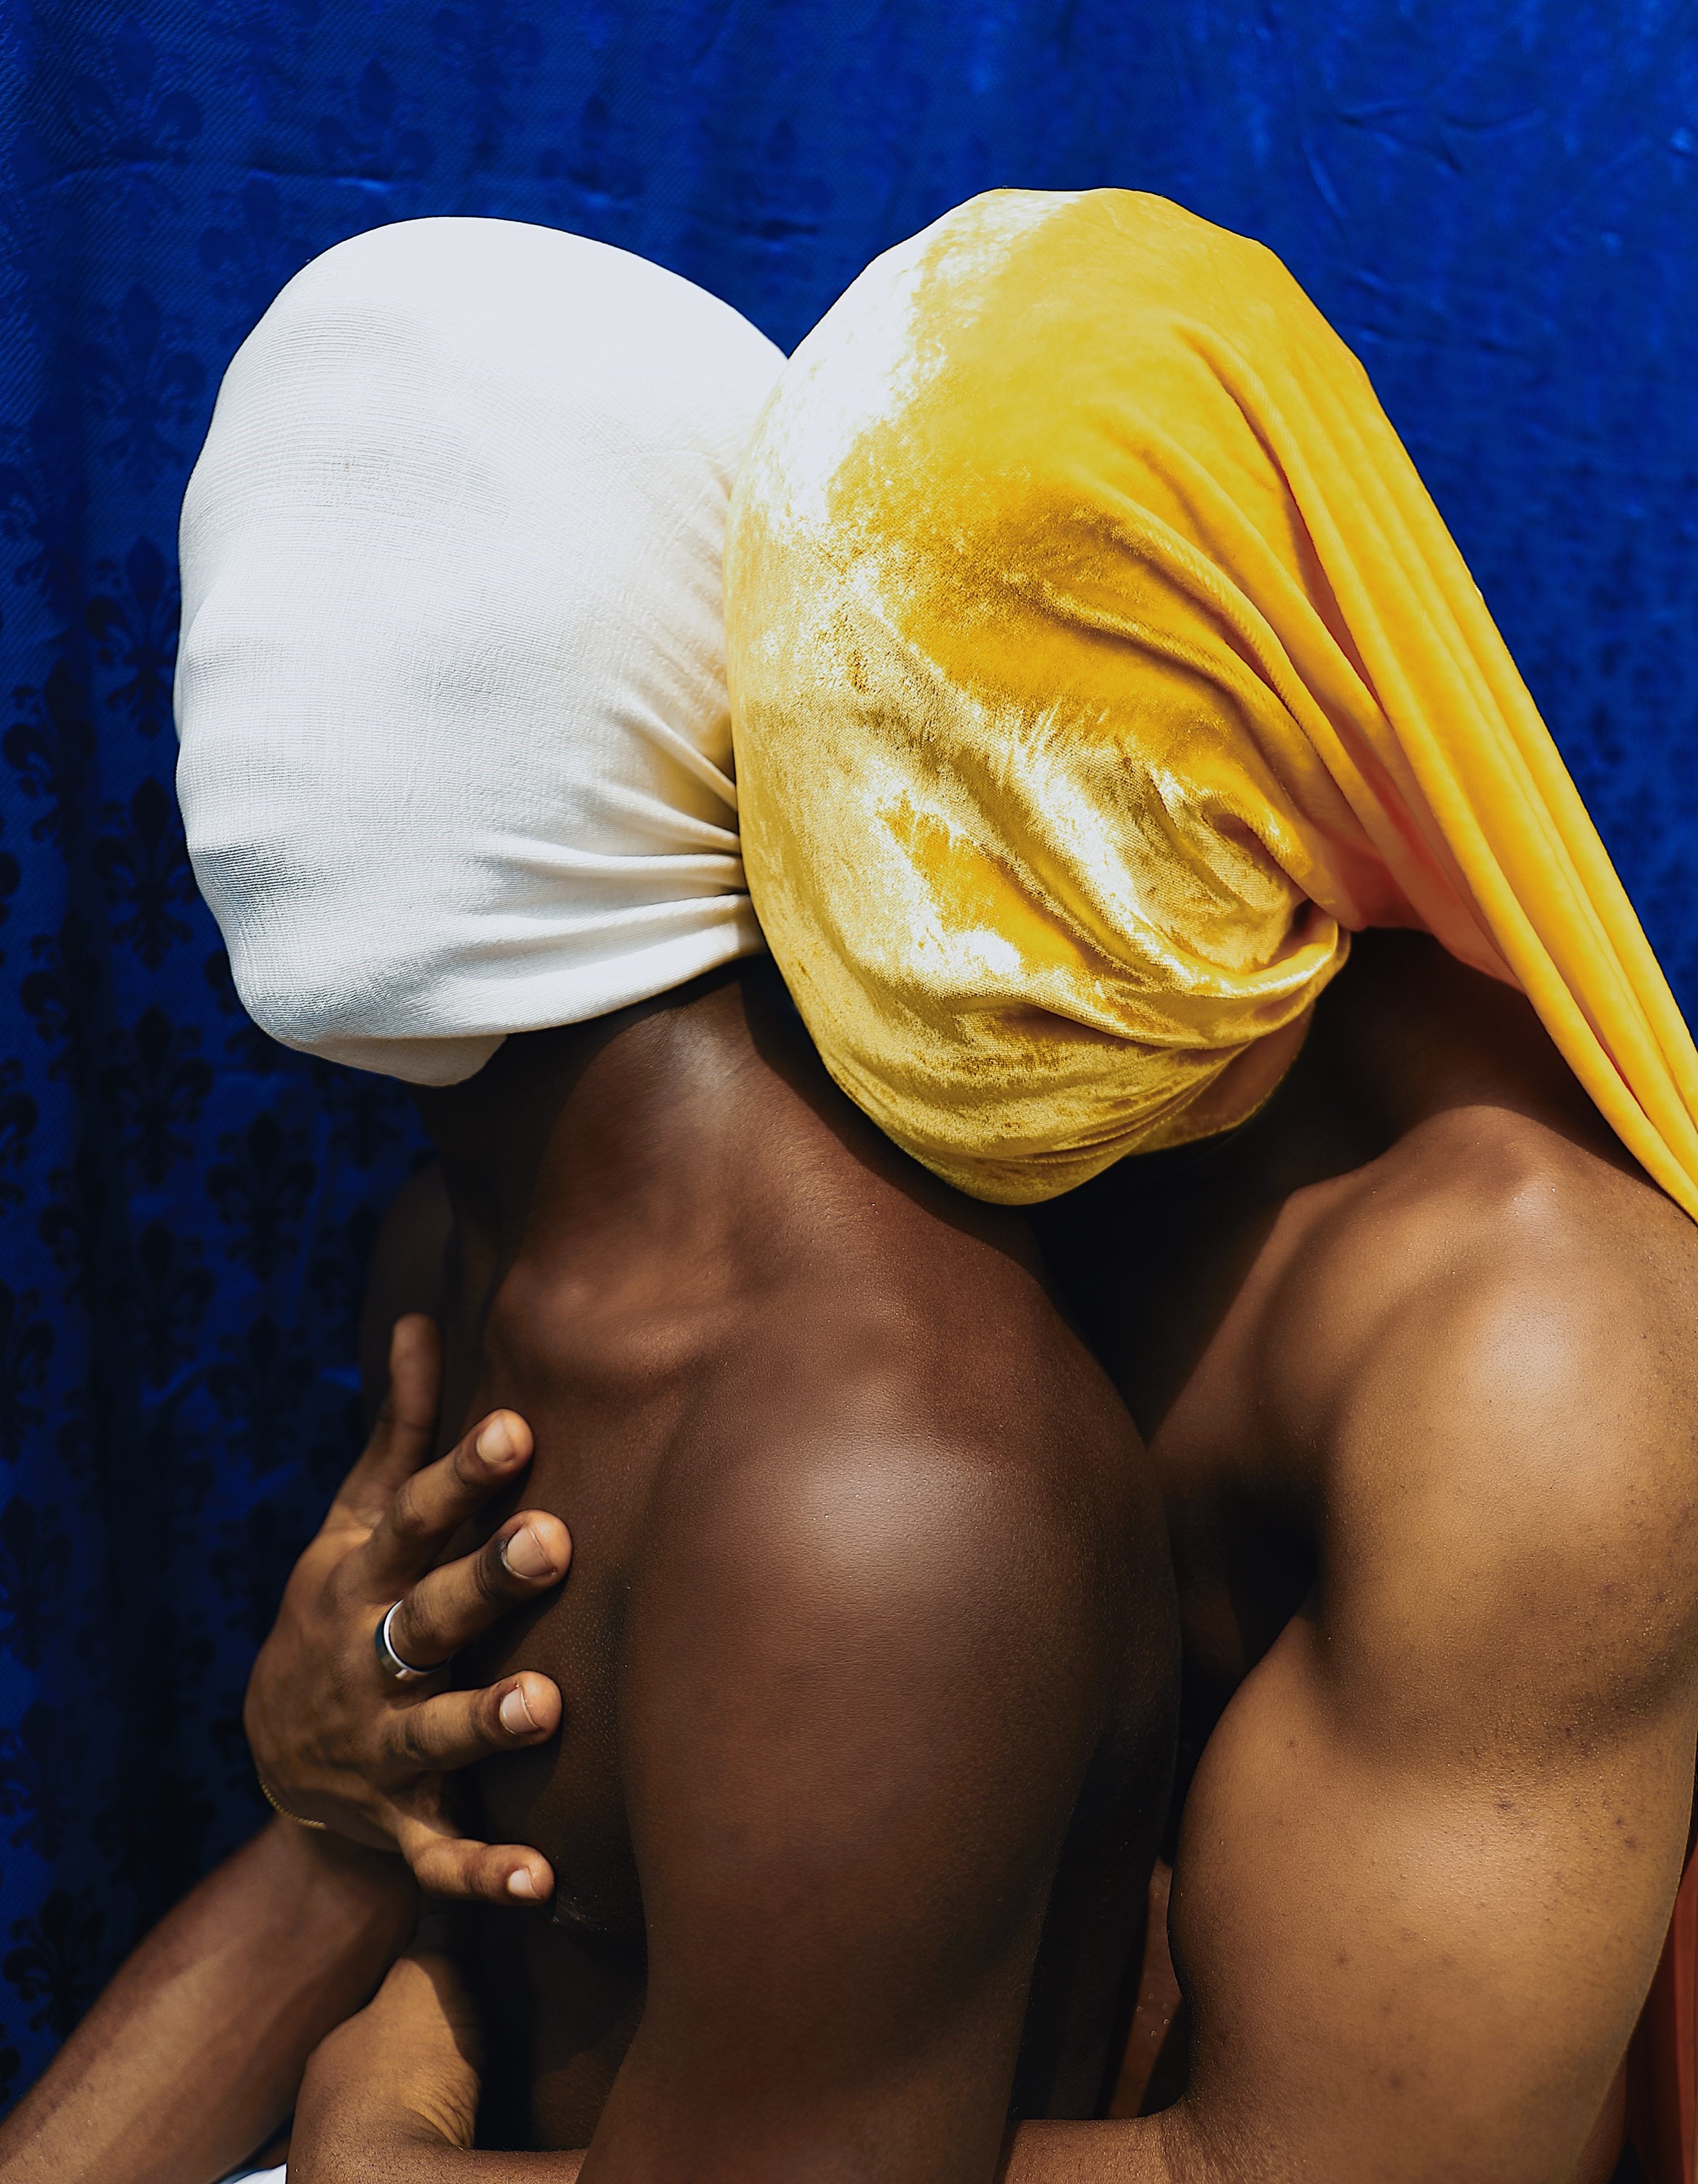 Sleeping Fuck Of Nigerian - What it's like being a gay porn star in Nigeria | Dazed